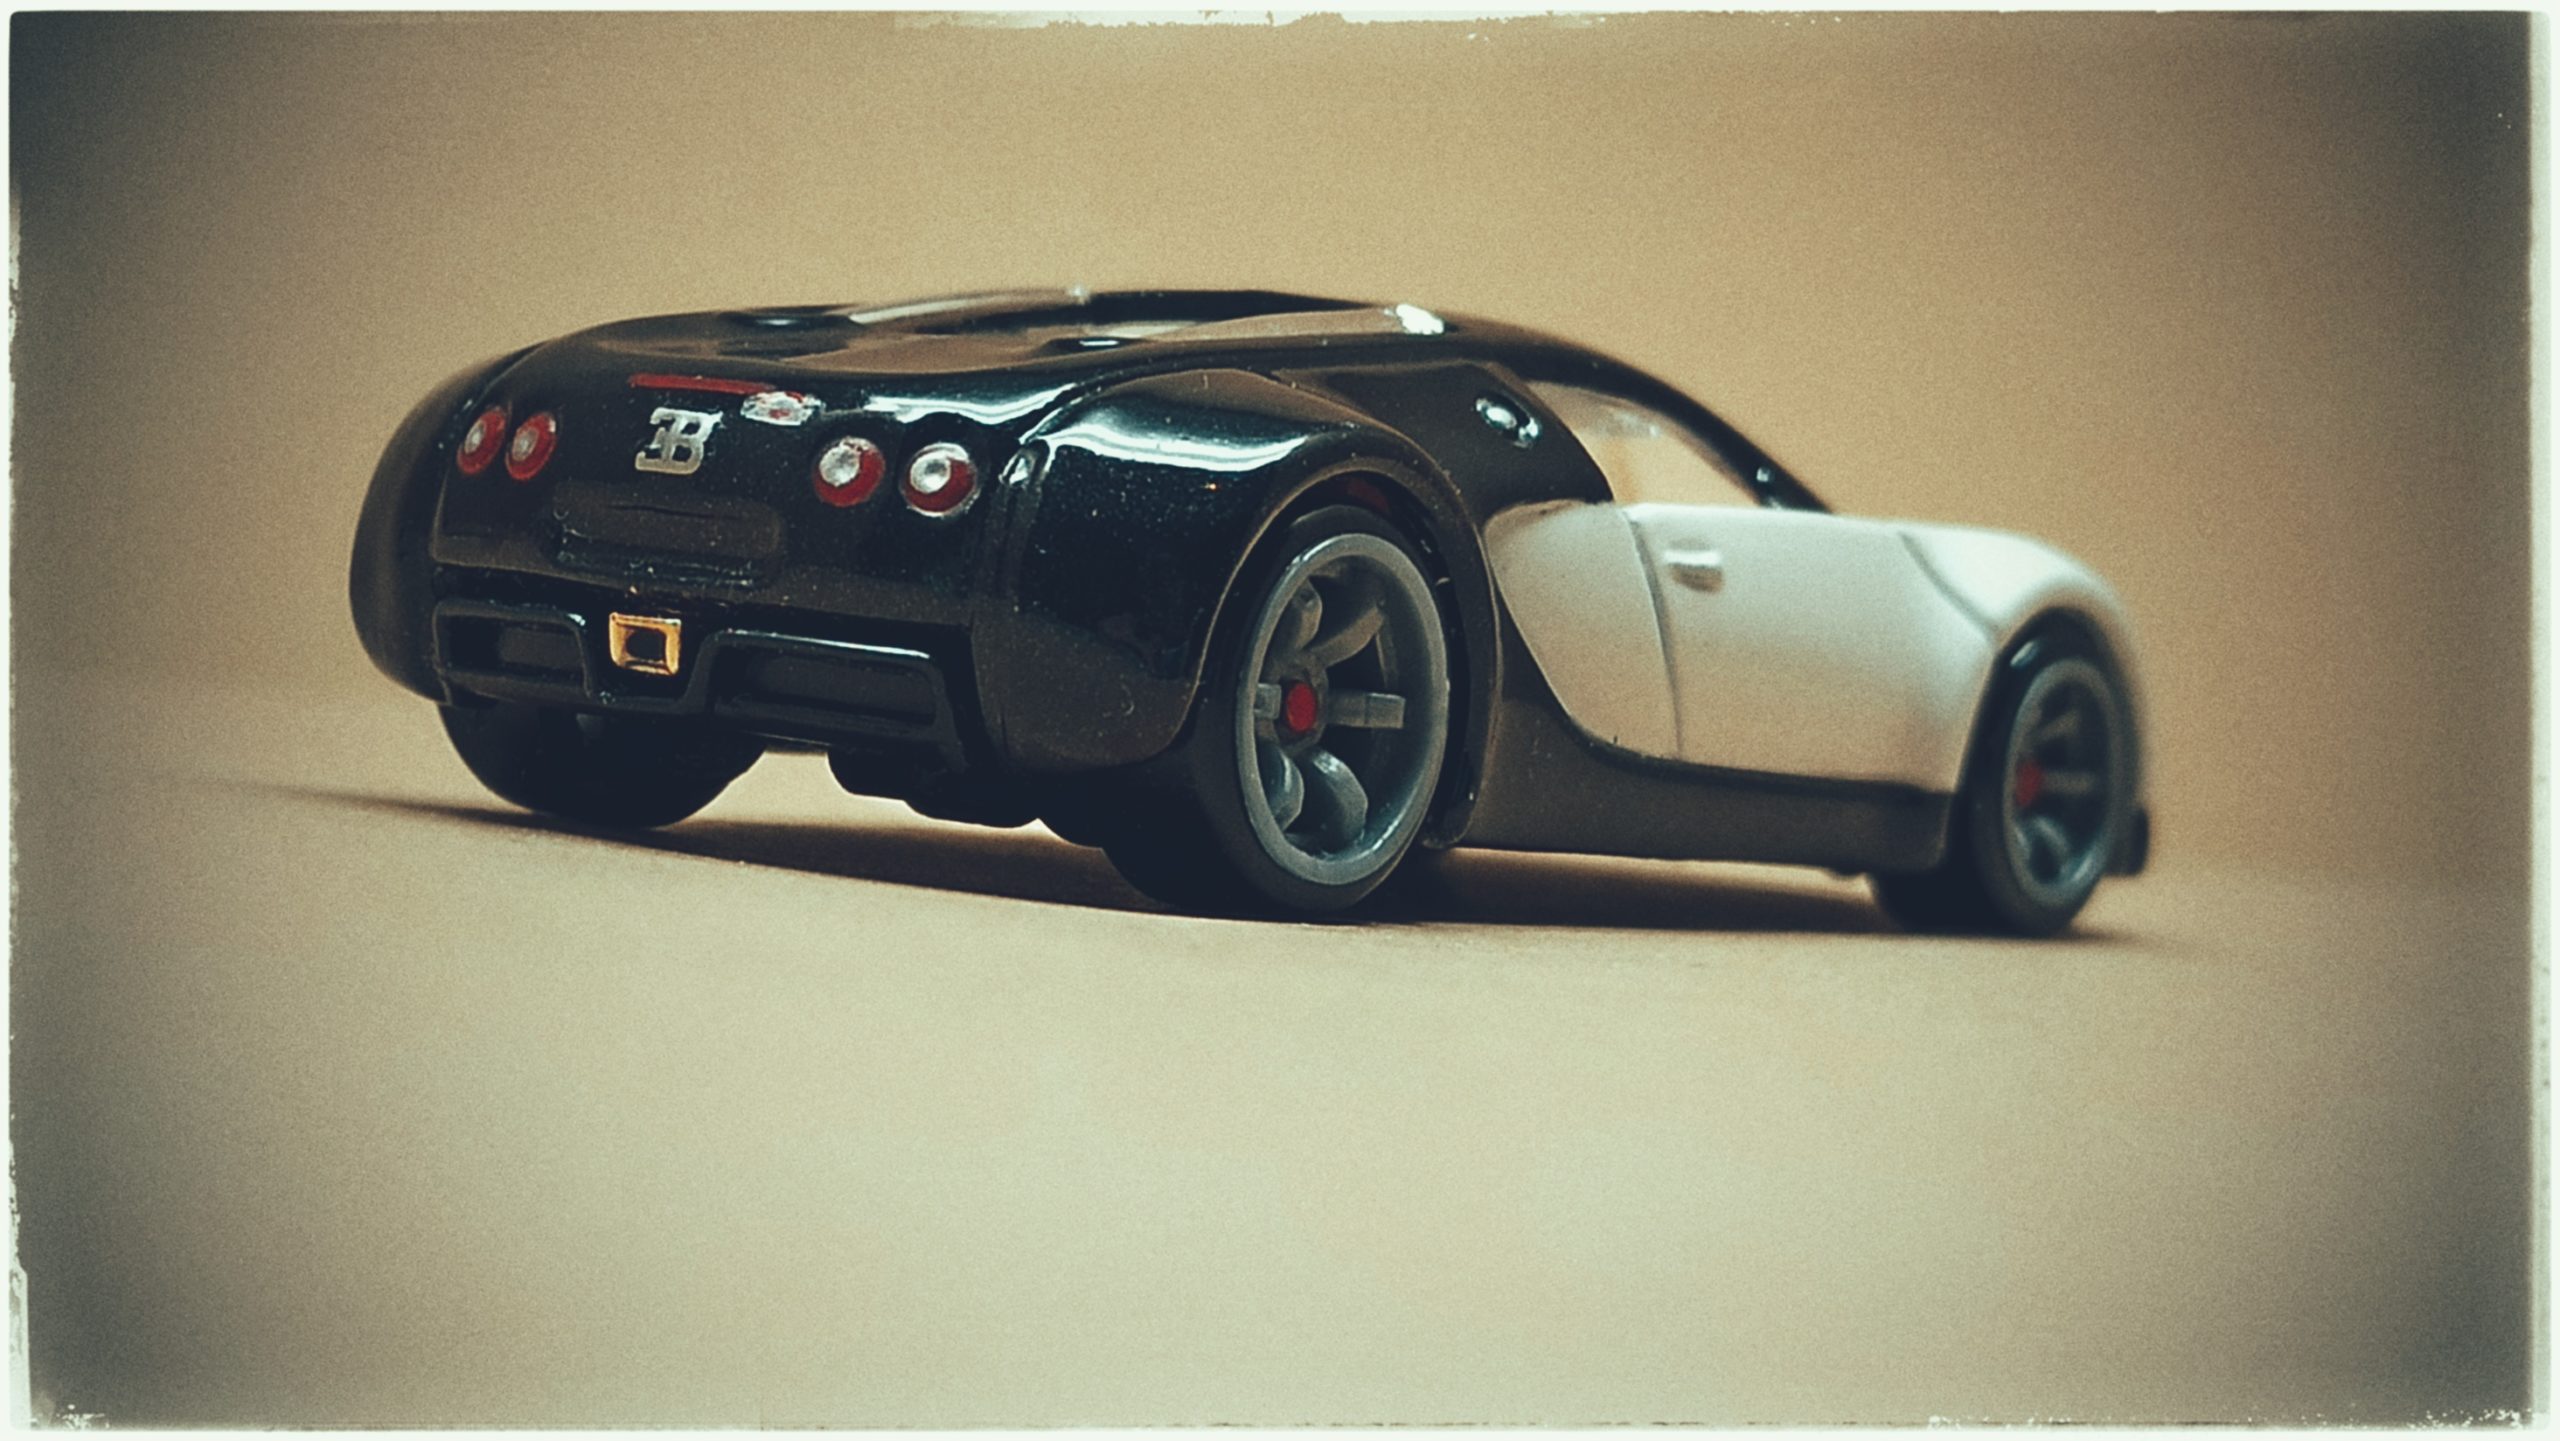 Hot Wheels Bugatti Veyron (R8483) 2010 Speed Machines black & white